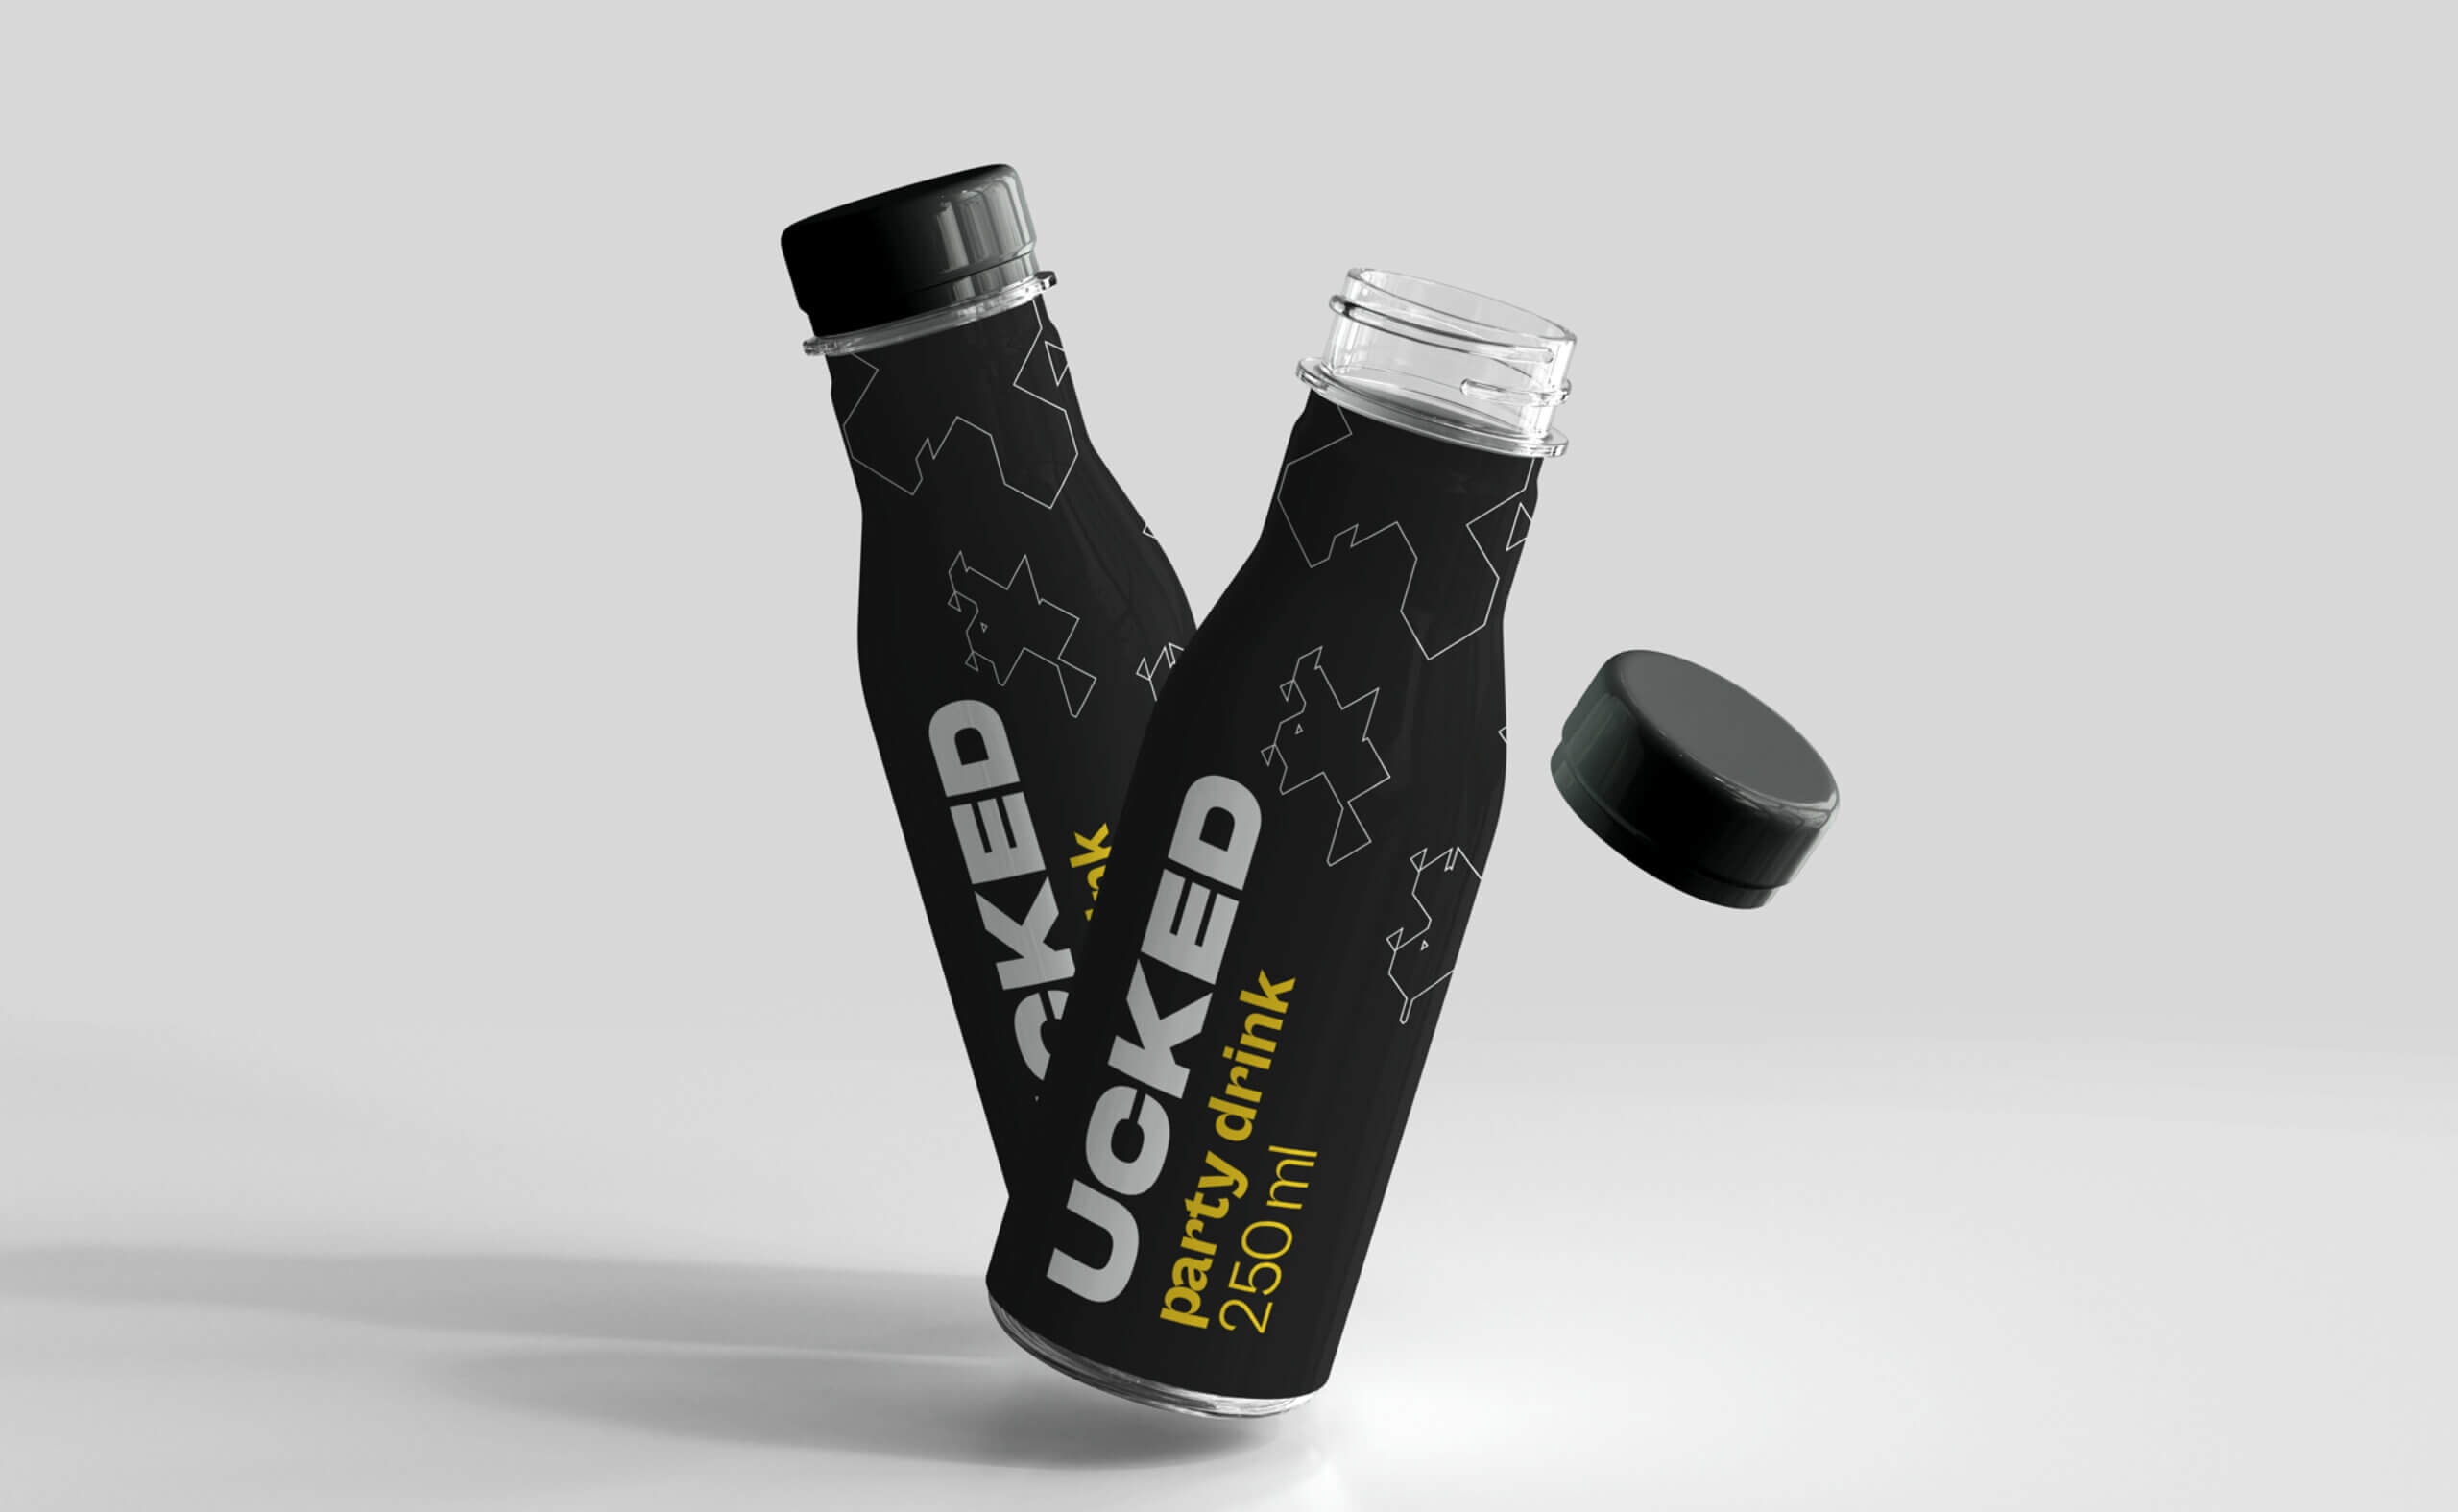 Ucked – branding & mobile app - Website Development - Photo 9